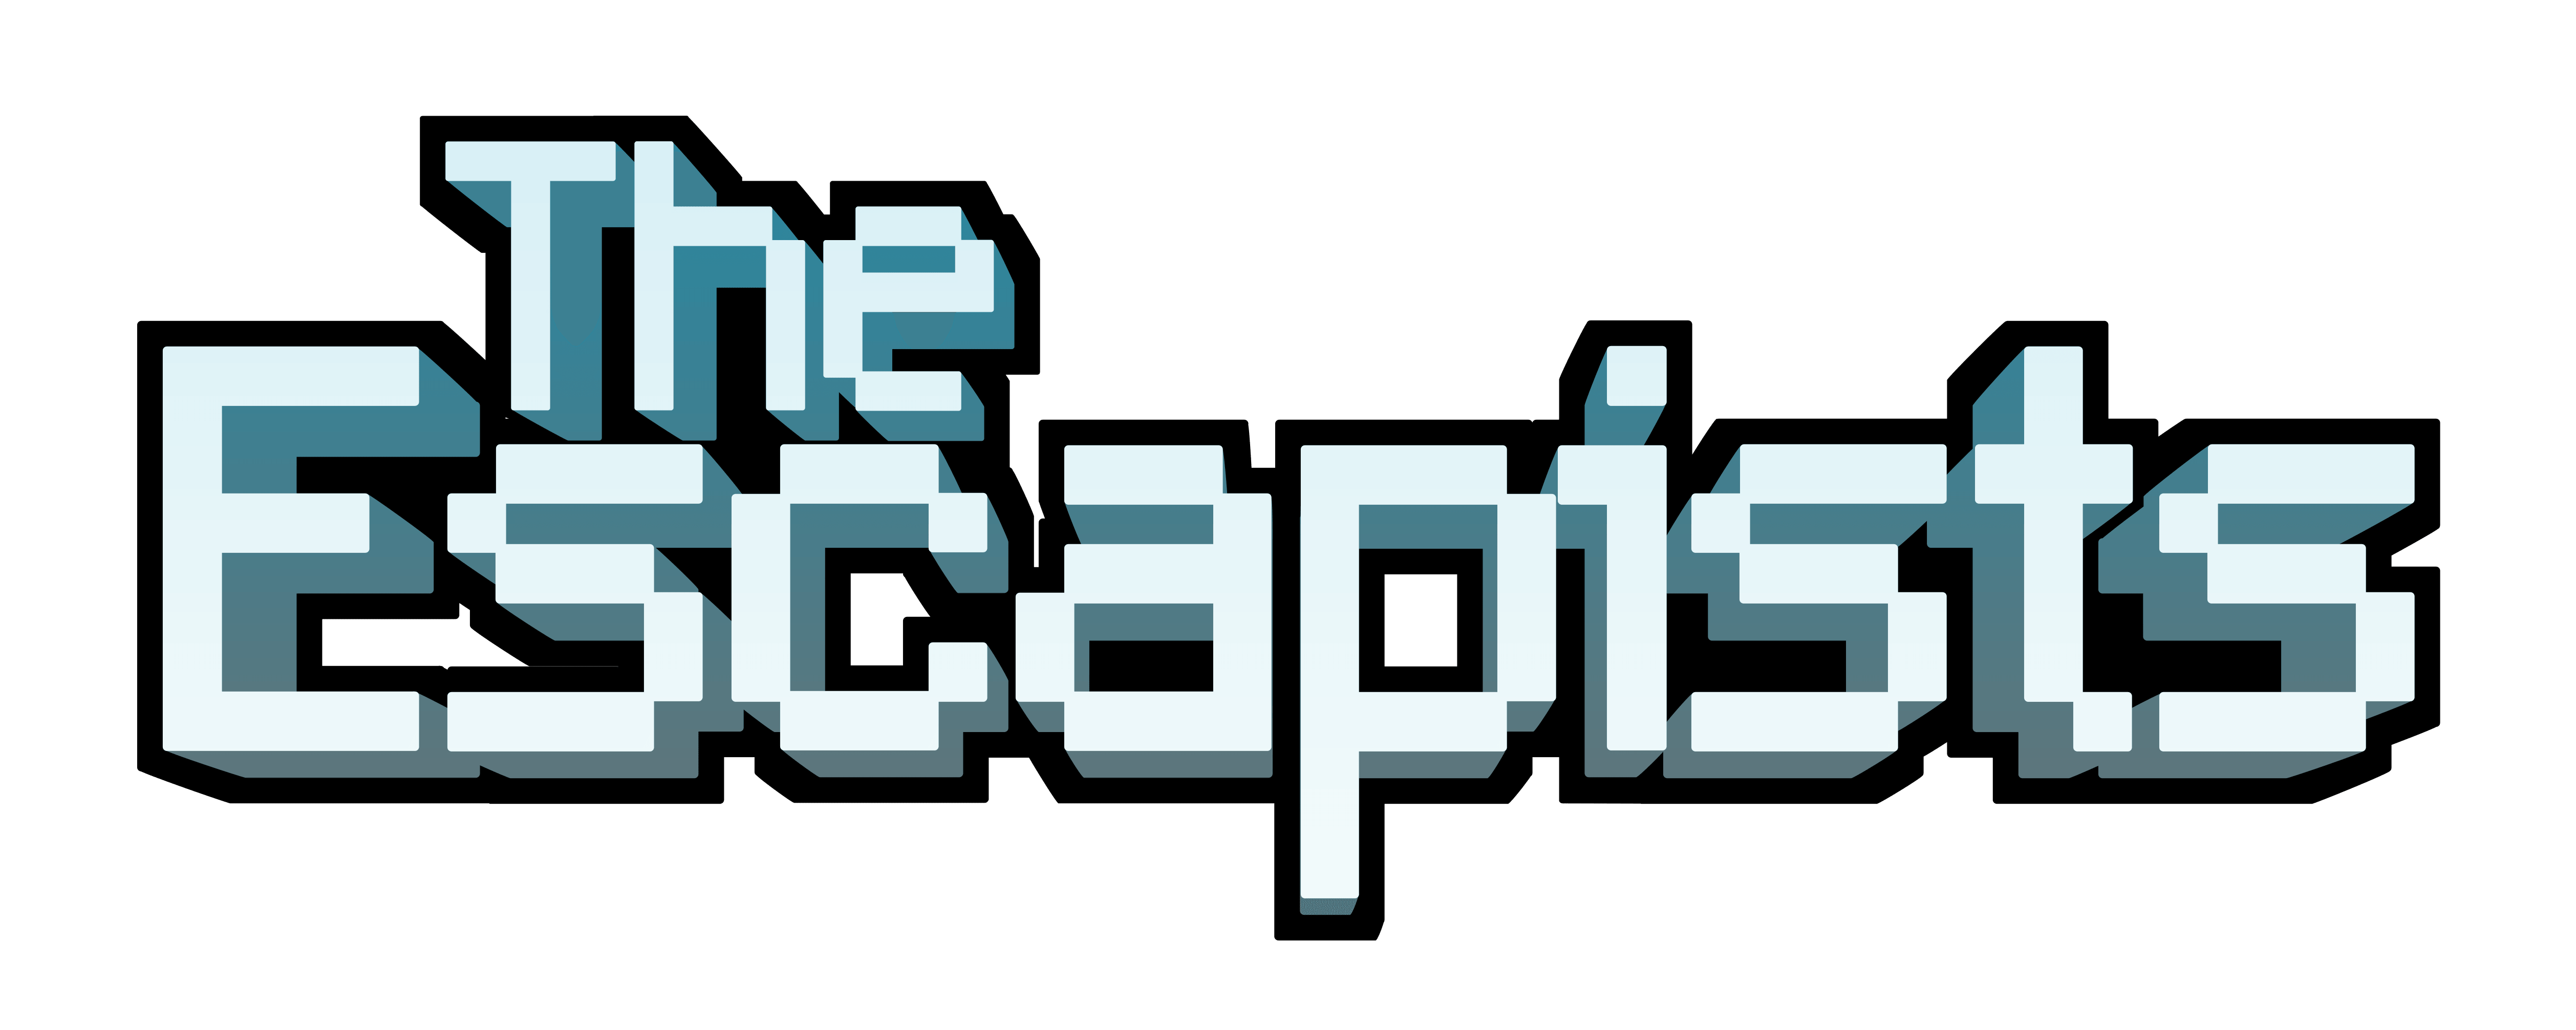 the escapist game xbox one